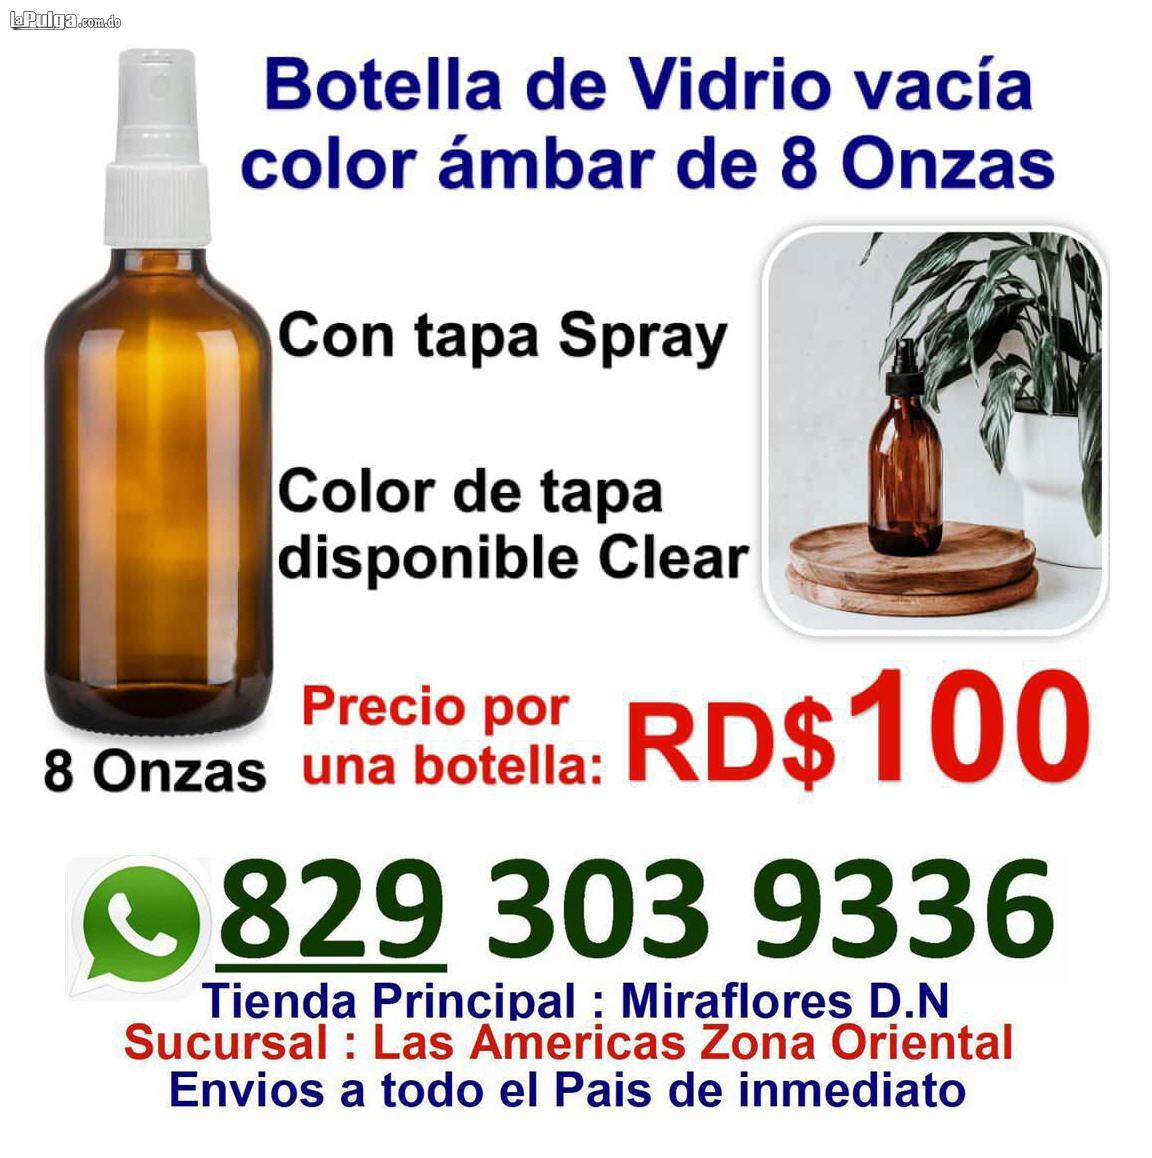 botellas frascos cristal ambar para cosmeticos o limpieza casa hogar Foto 7137189-2.jpg